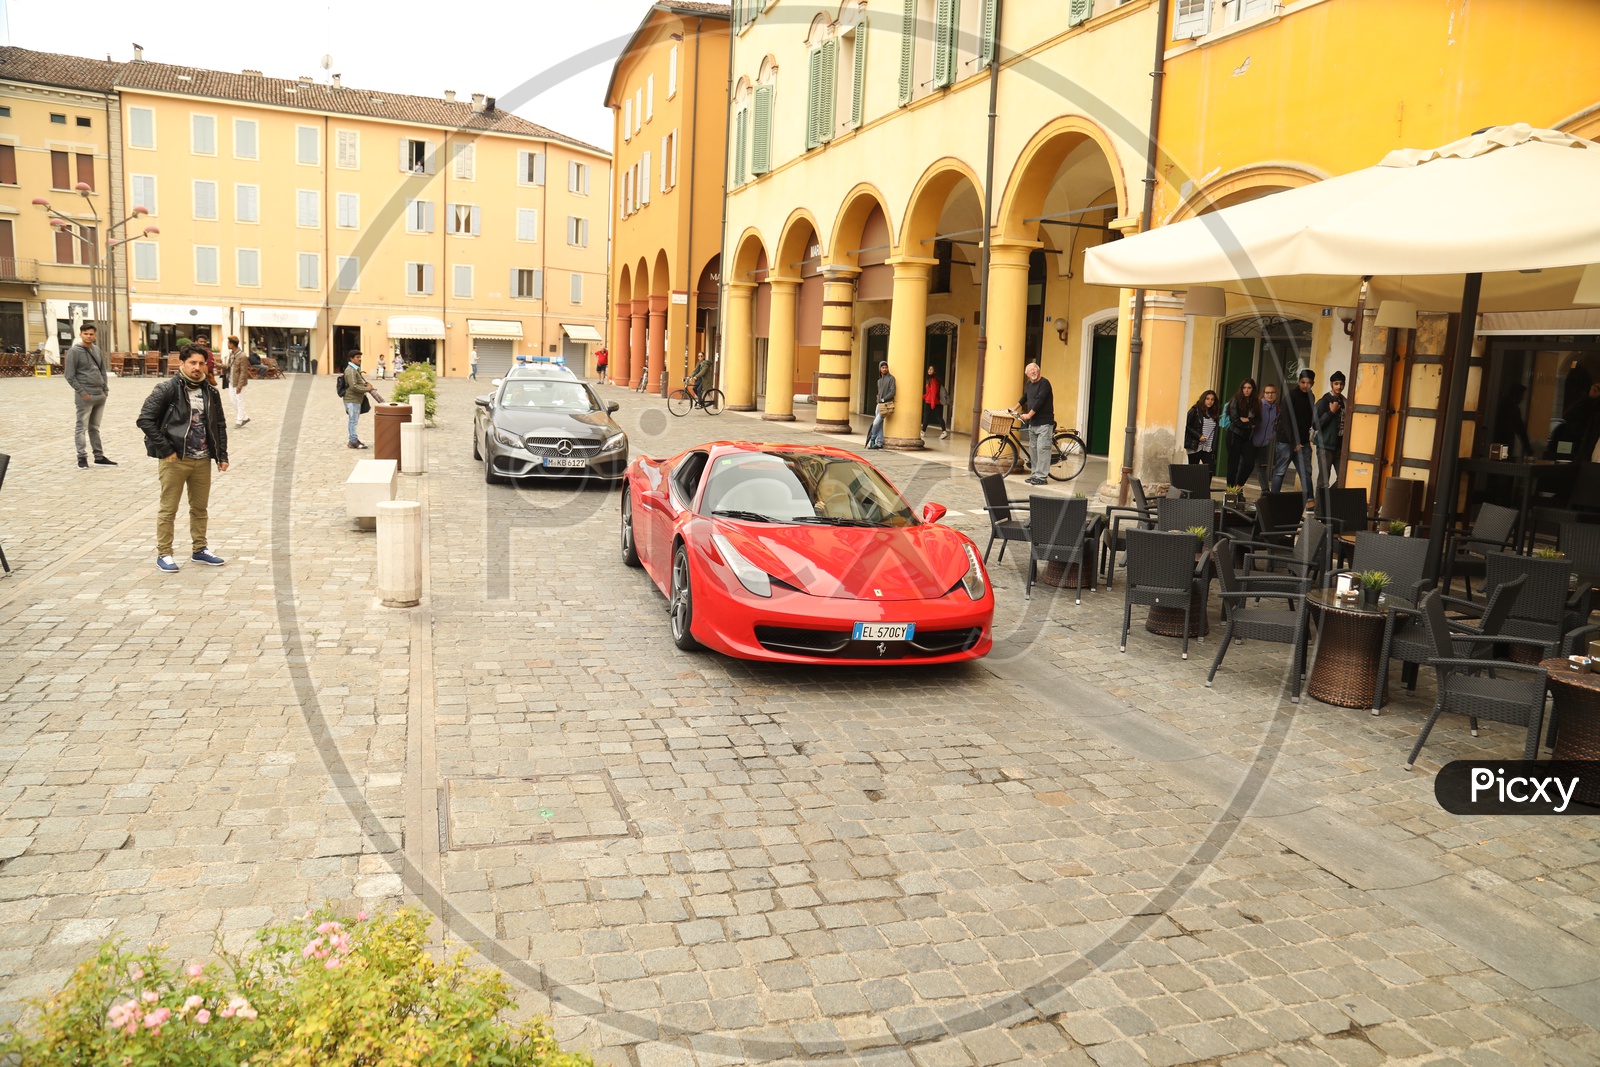 Ferrari 458 Car on the Streets of Italy